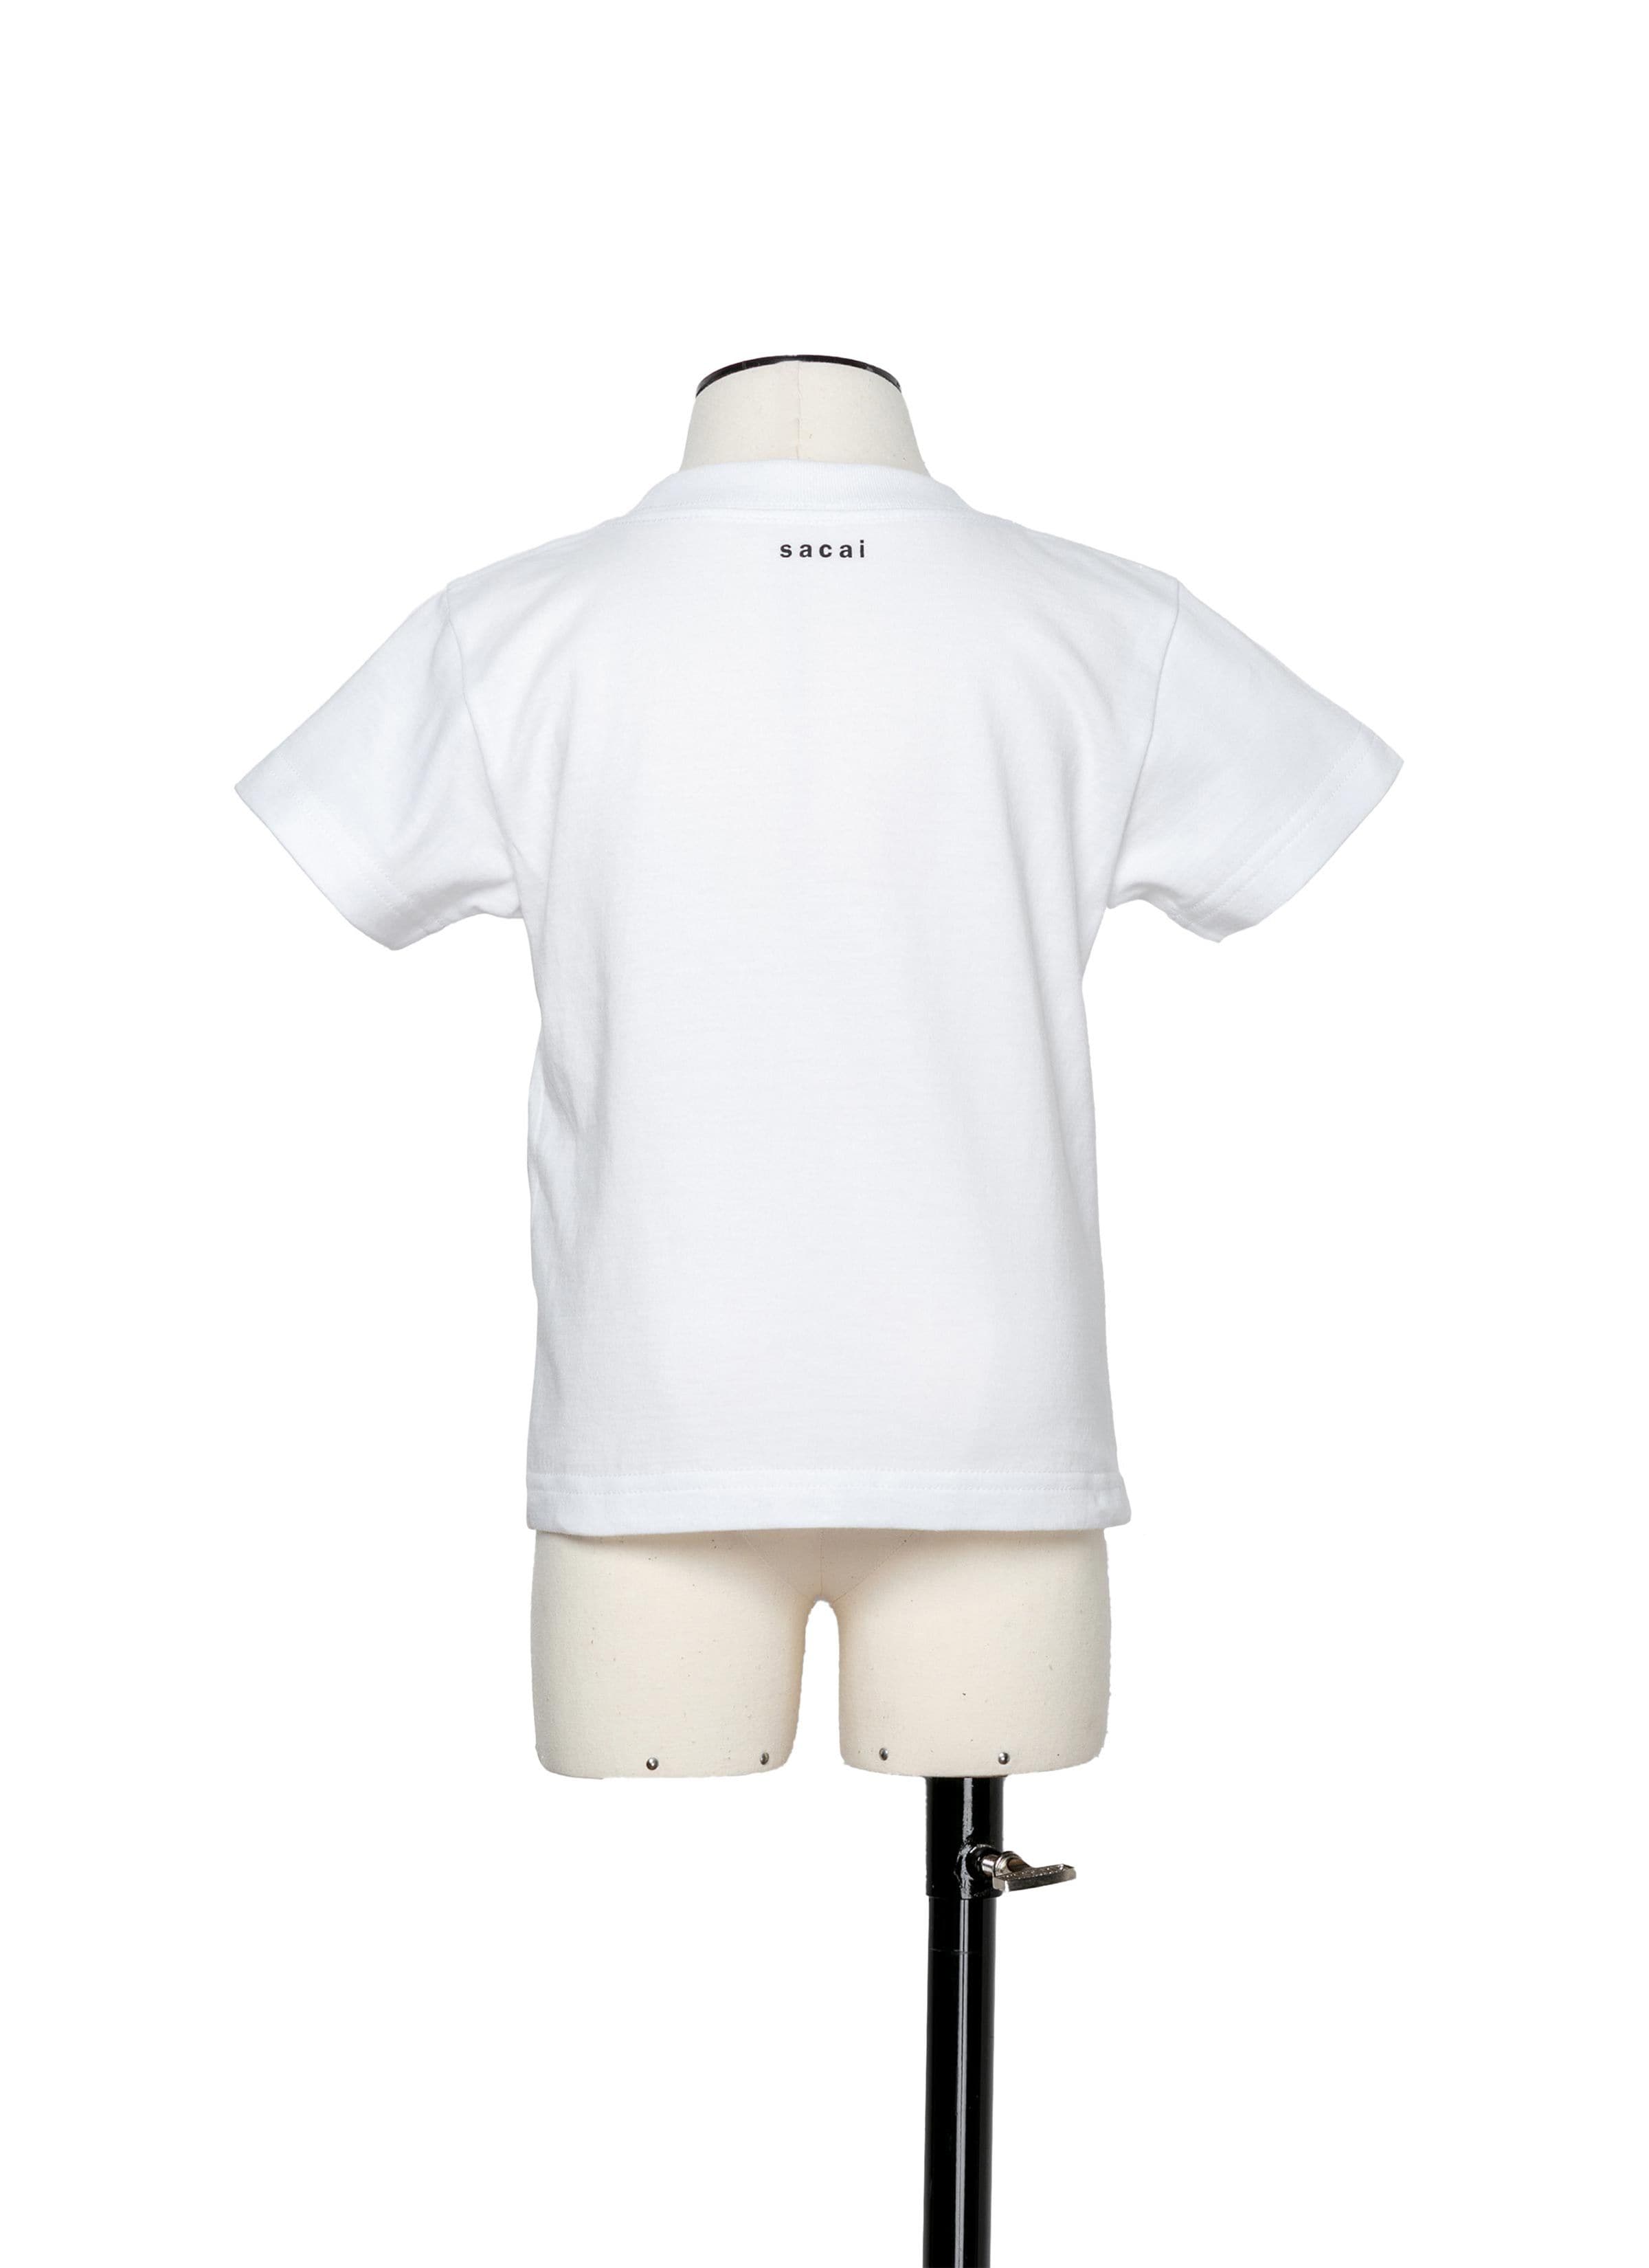 sacai x KAWS / Flock Print T-Shirt 詳細画像 WHITE×RED 3